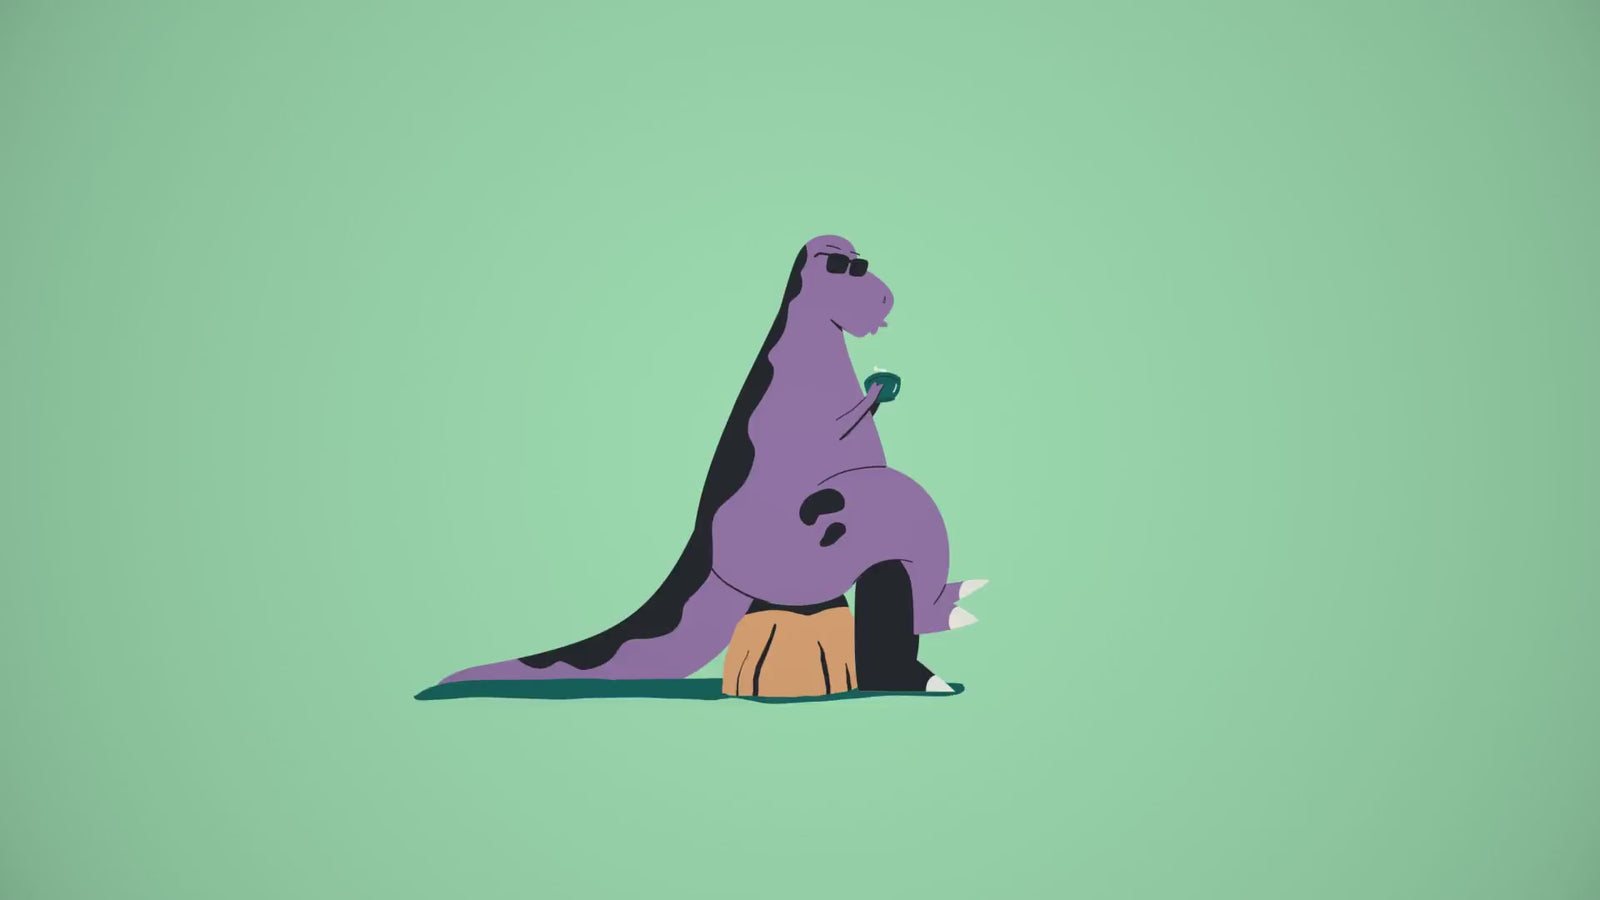 dinosaur sitting and waiting